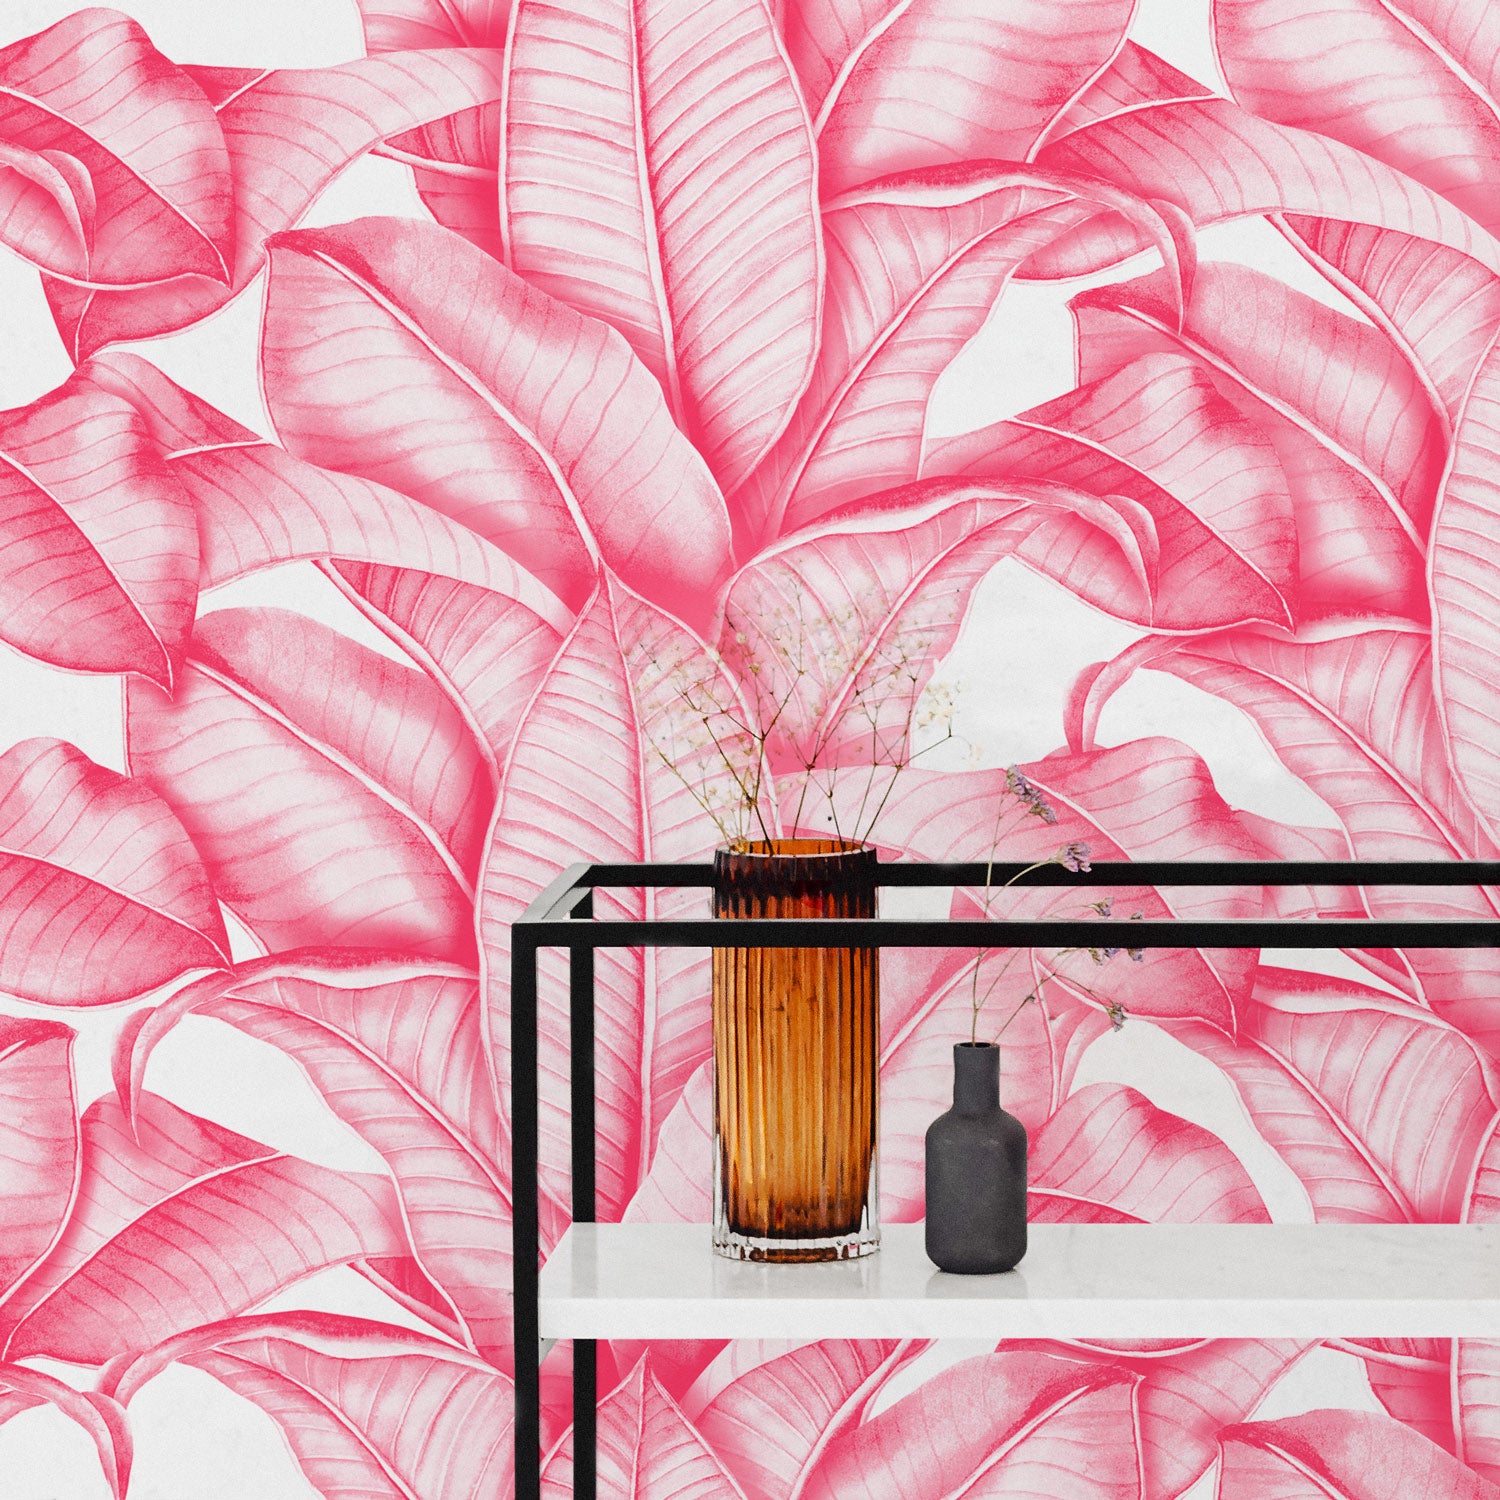 Banana Leaves Wallpaper, Palm Leaves Line Art Pattern Peel and Stick Wall  Mural.